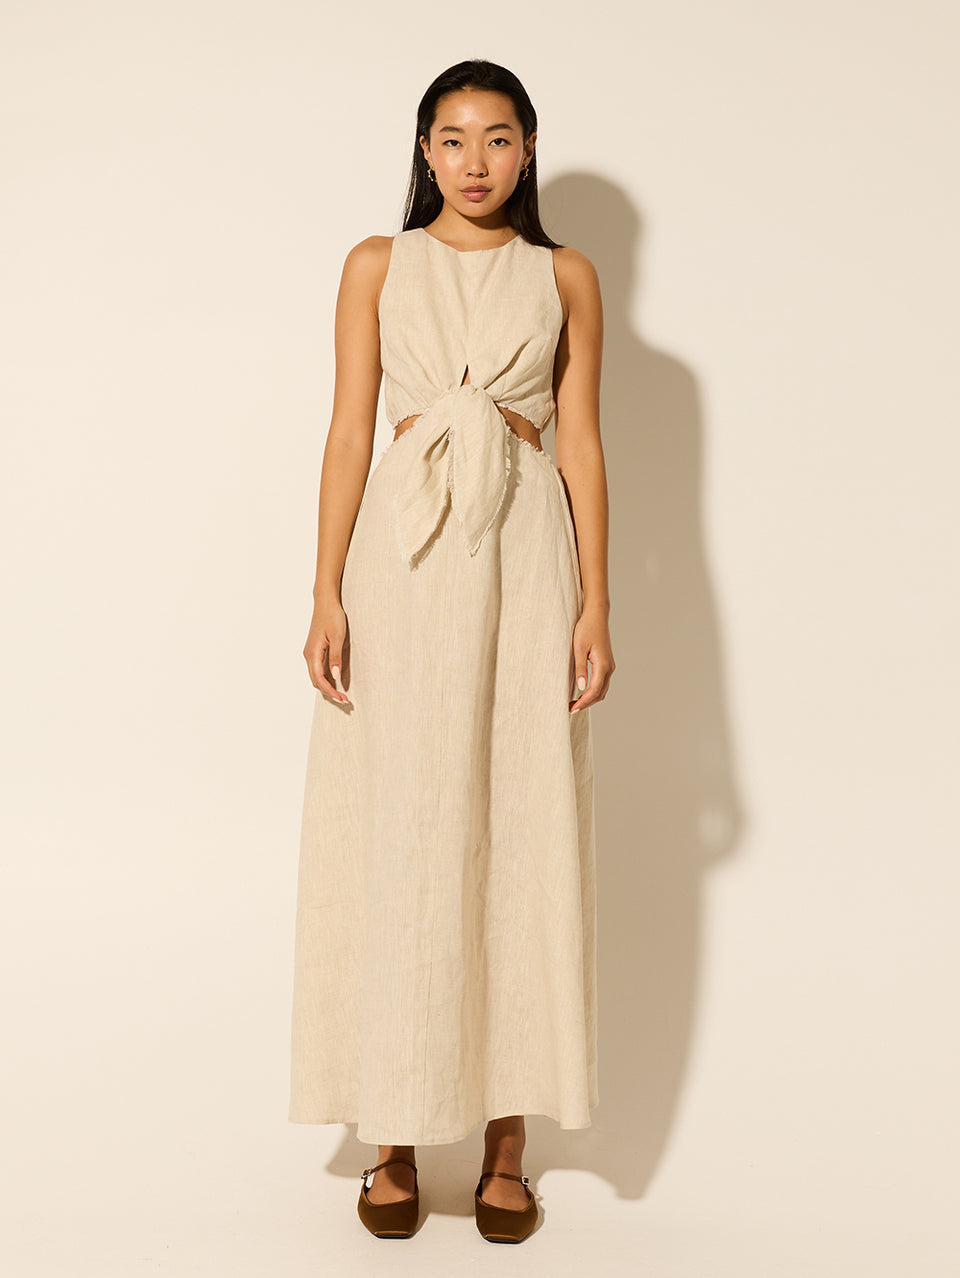 Ellie Cut Out Maxi Dress KIVARI | Model wears neutral linen maxi dress